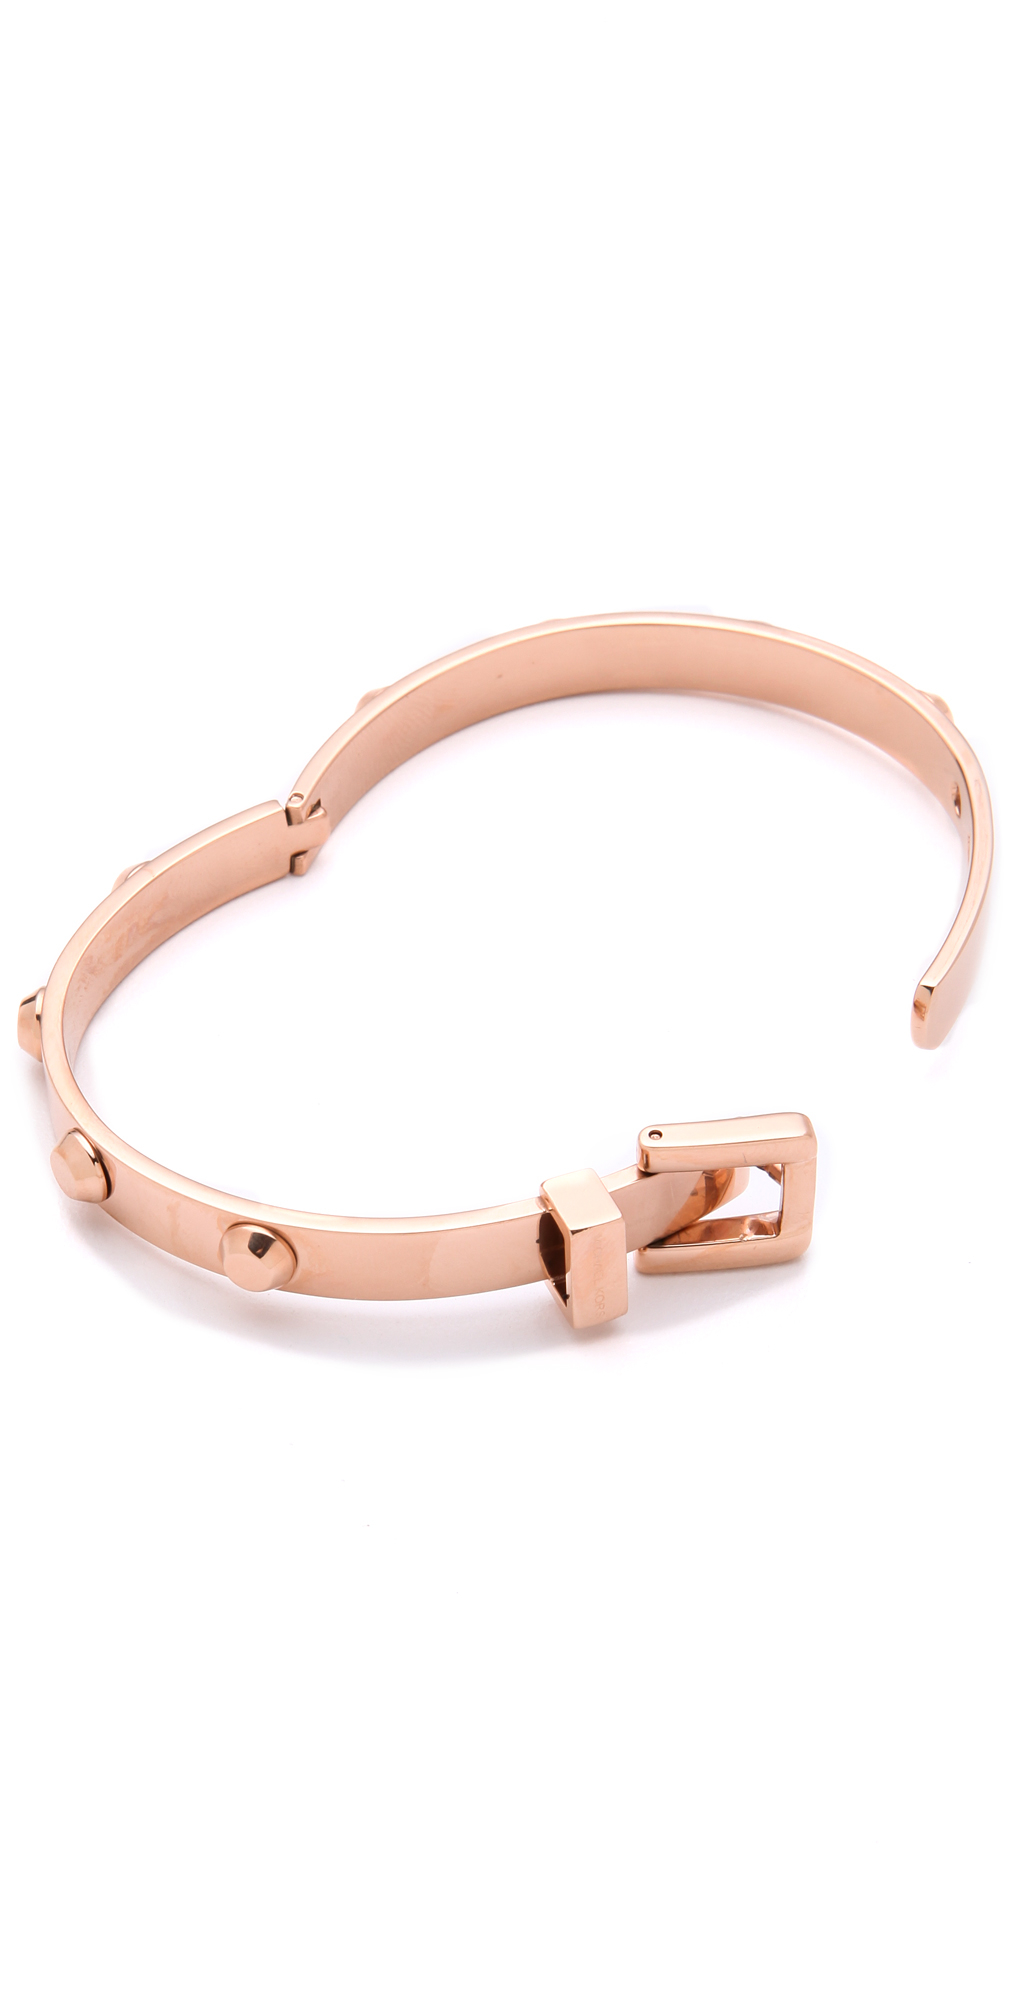 Michael Kors Fashion Rose Gold Brass Chain Bracelet  MKJ7745791  Watch  Station